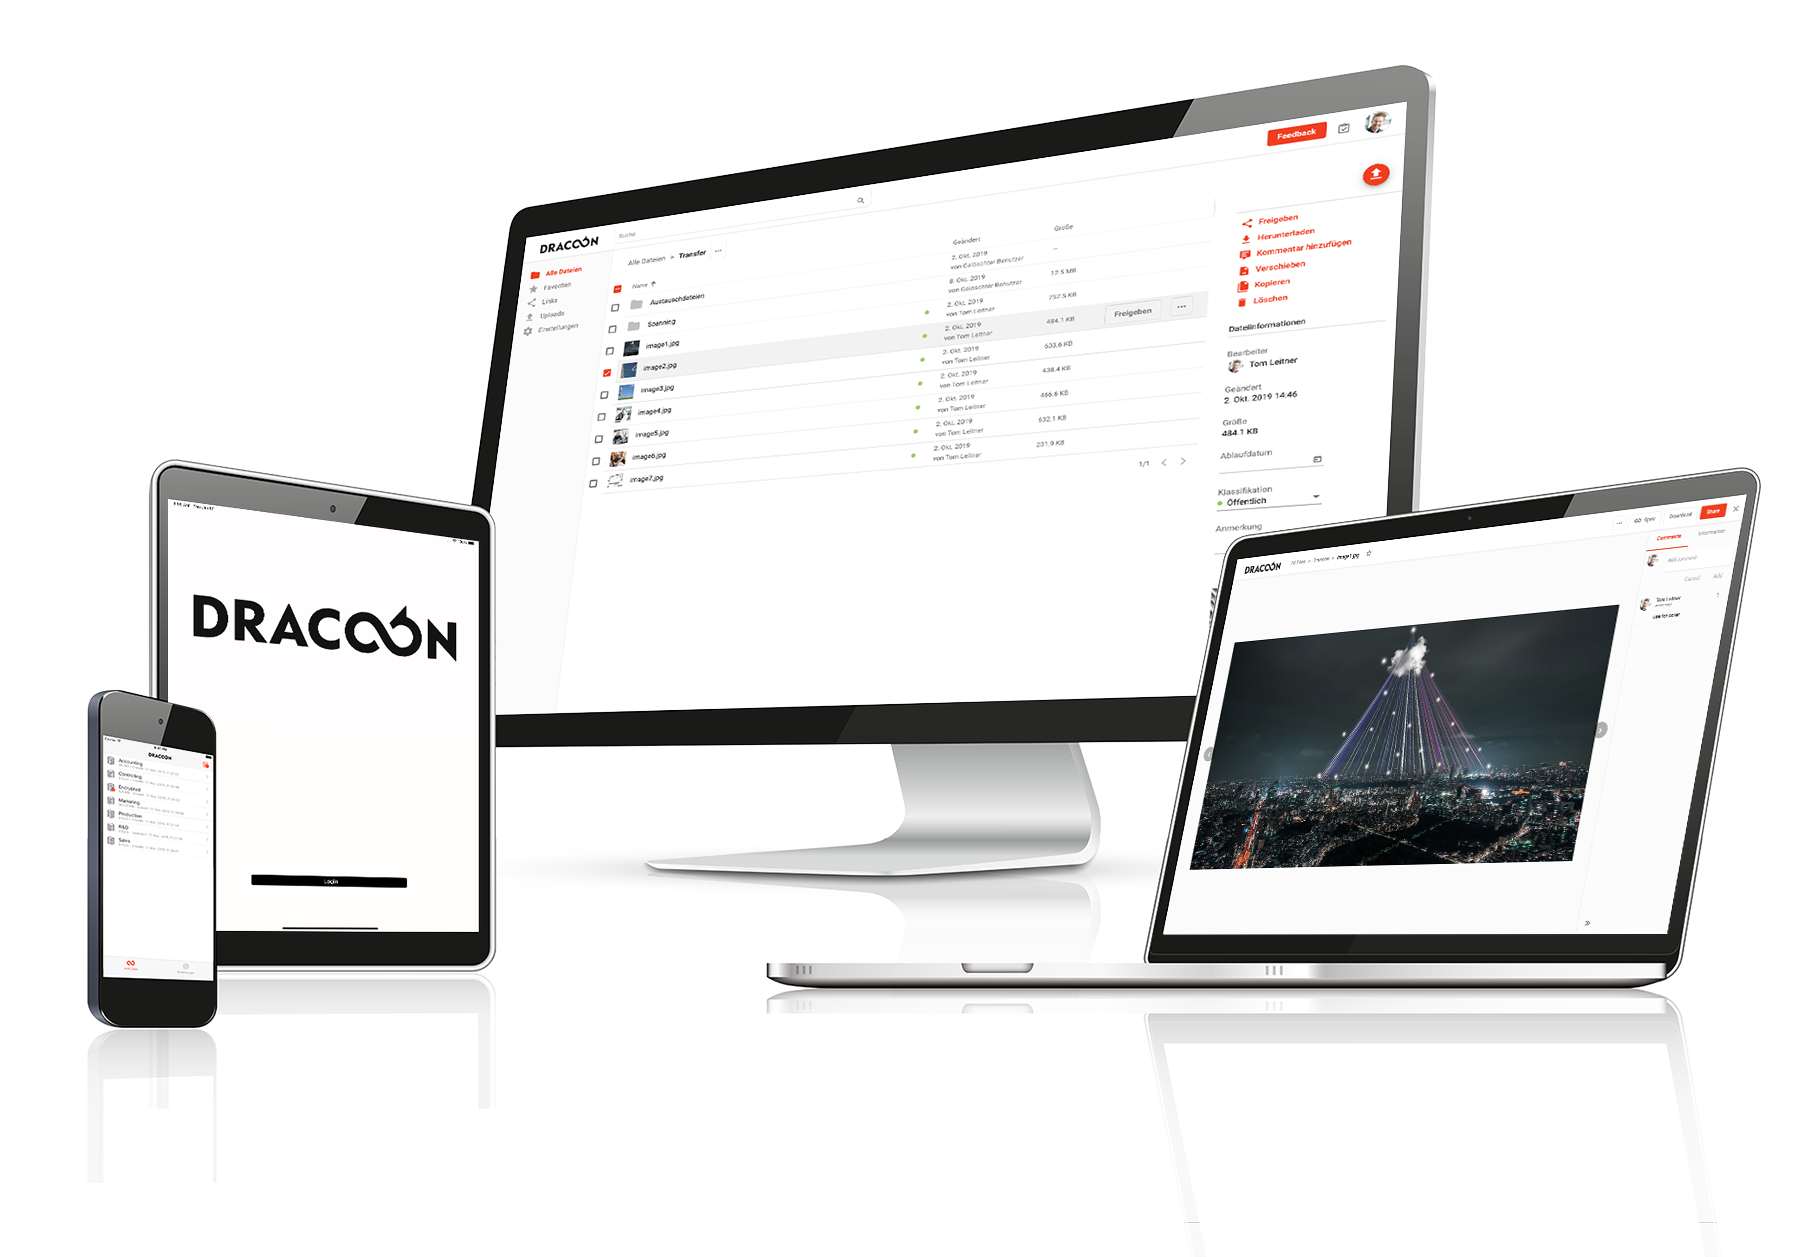 DRACOON revolutionizes its Web App